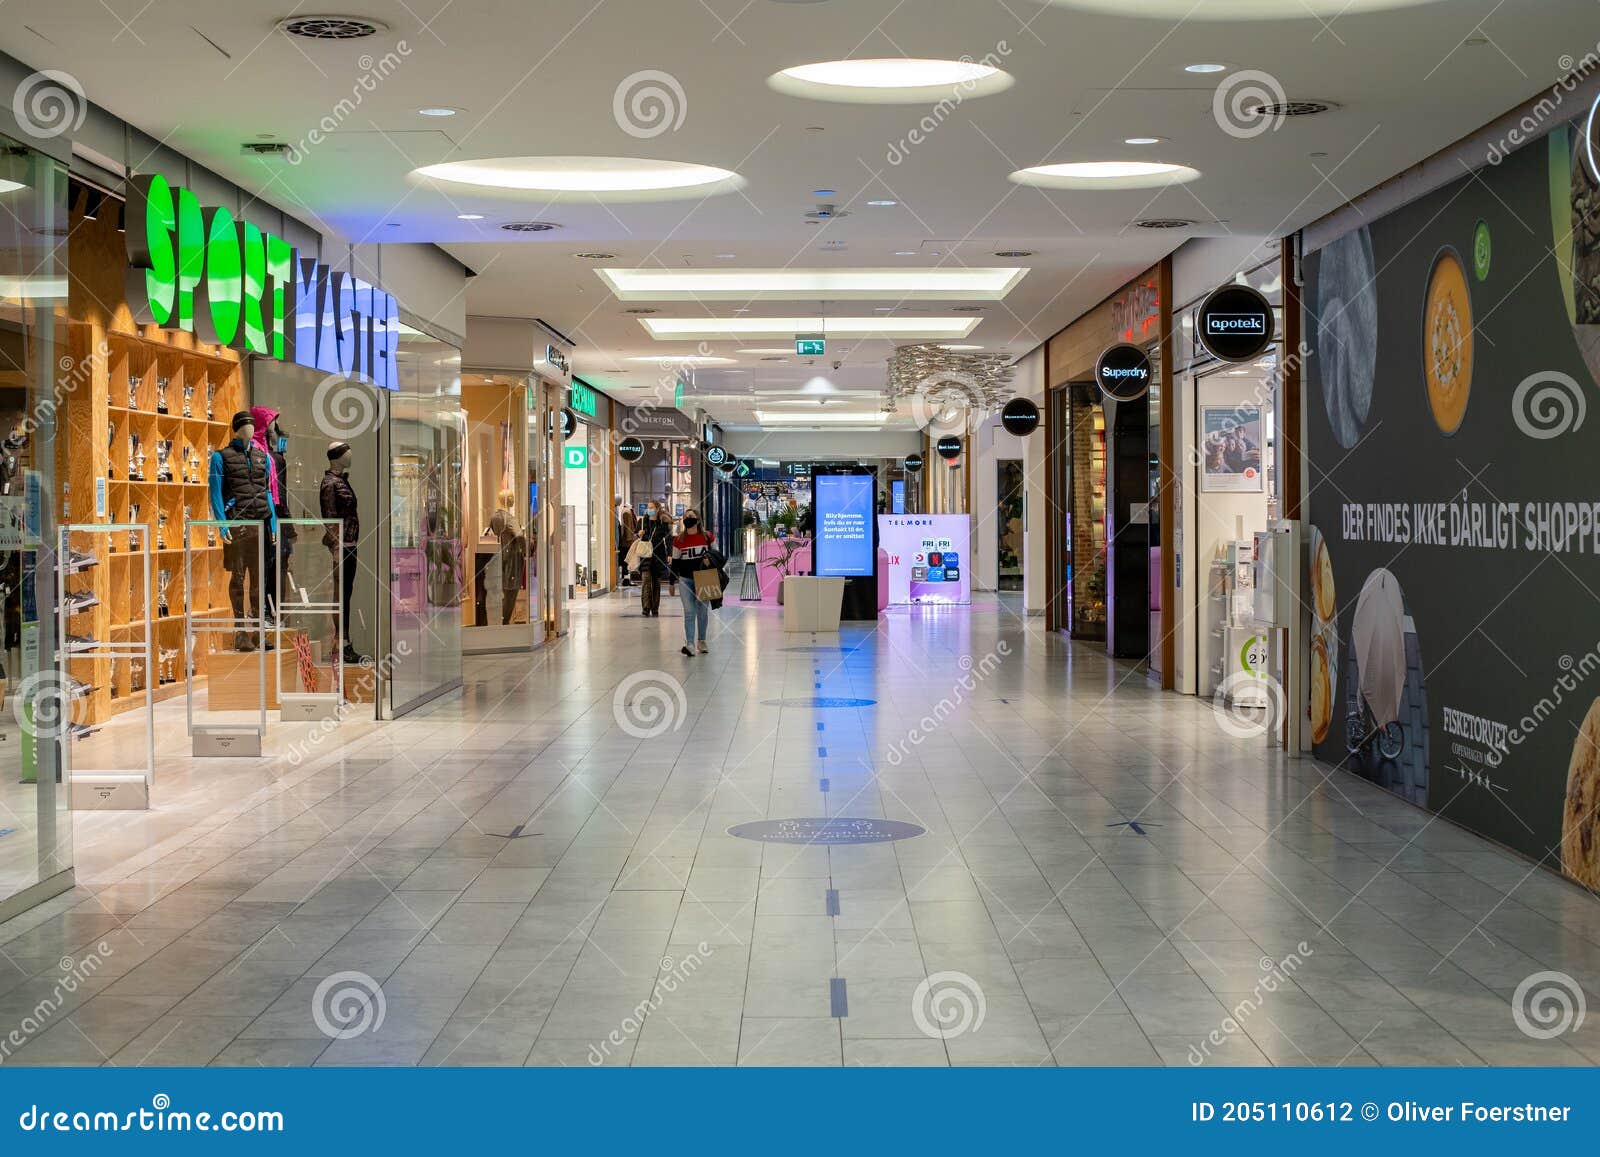 Fisketorvet Shopping Mall in Copenhagen, Editorial - Image of popular,